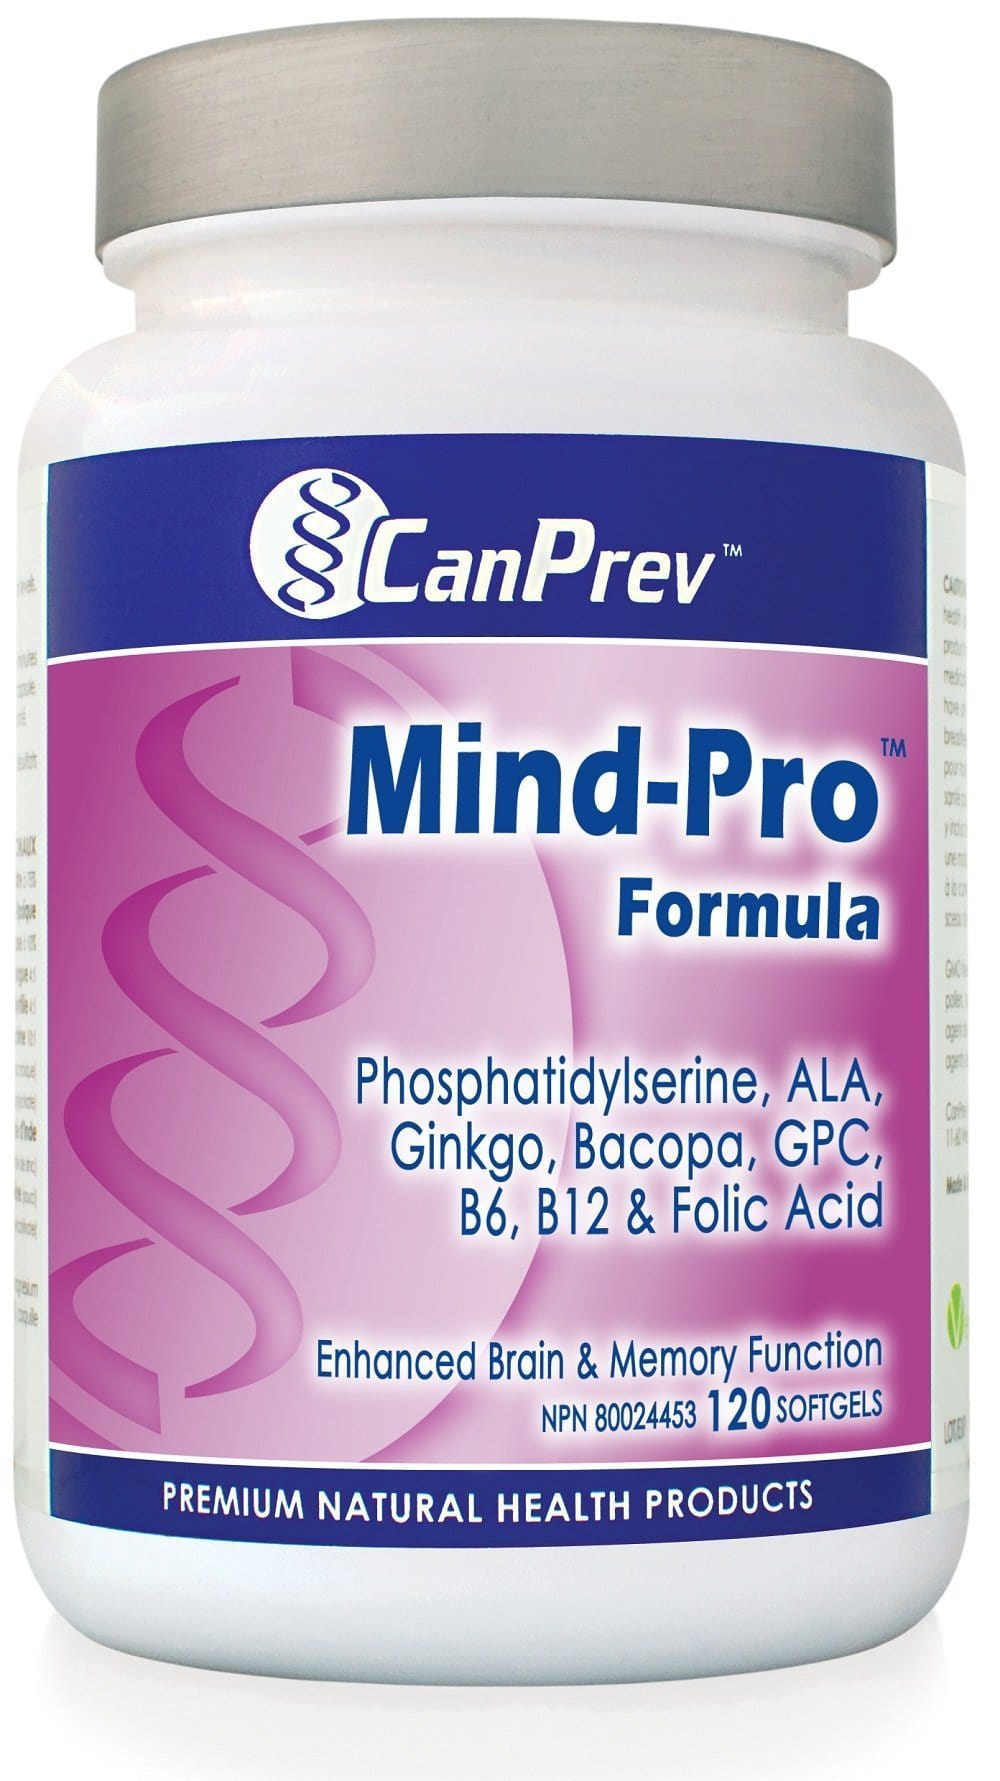 CanPrev Mind-Pro Formula - by CanPrev |ProCare Outlet|